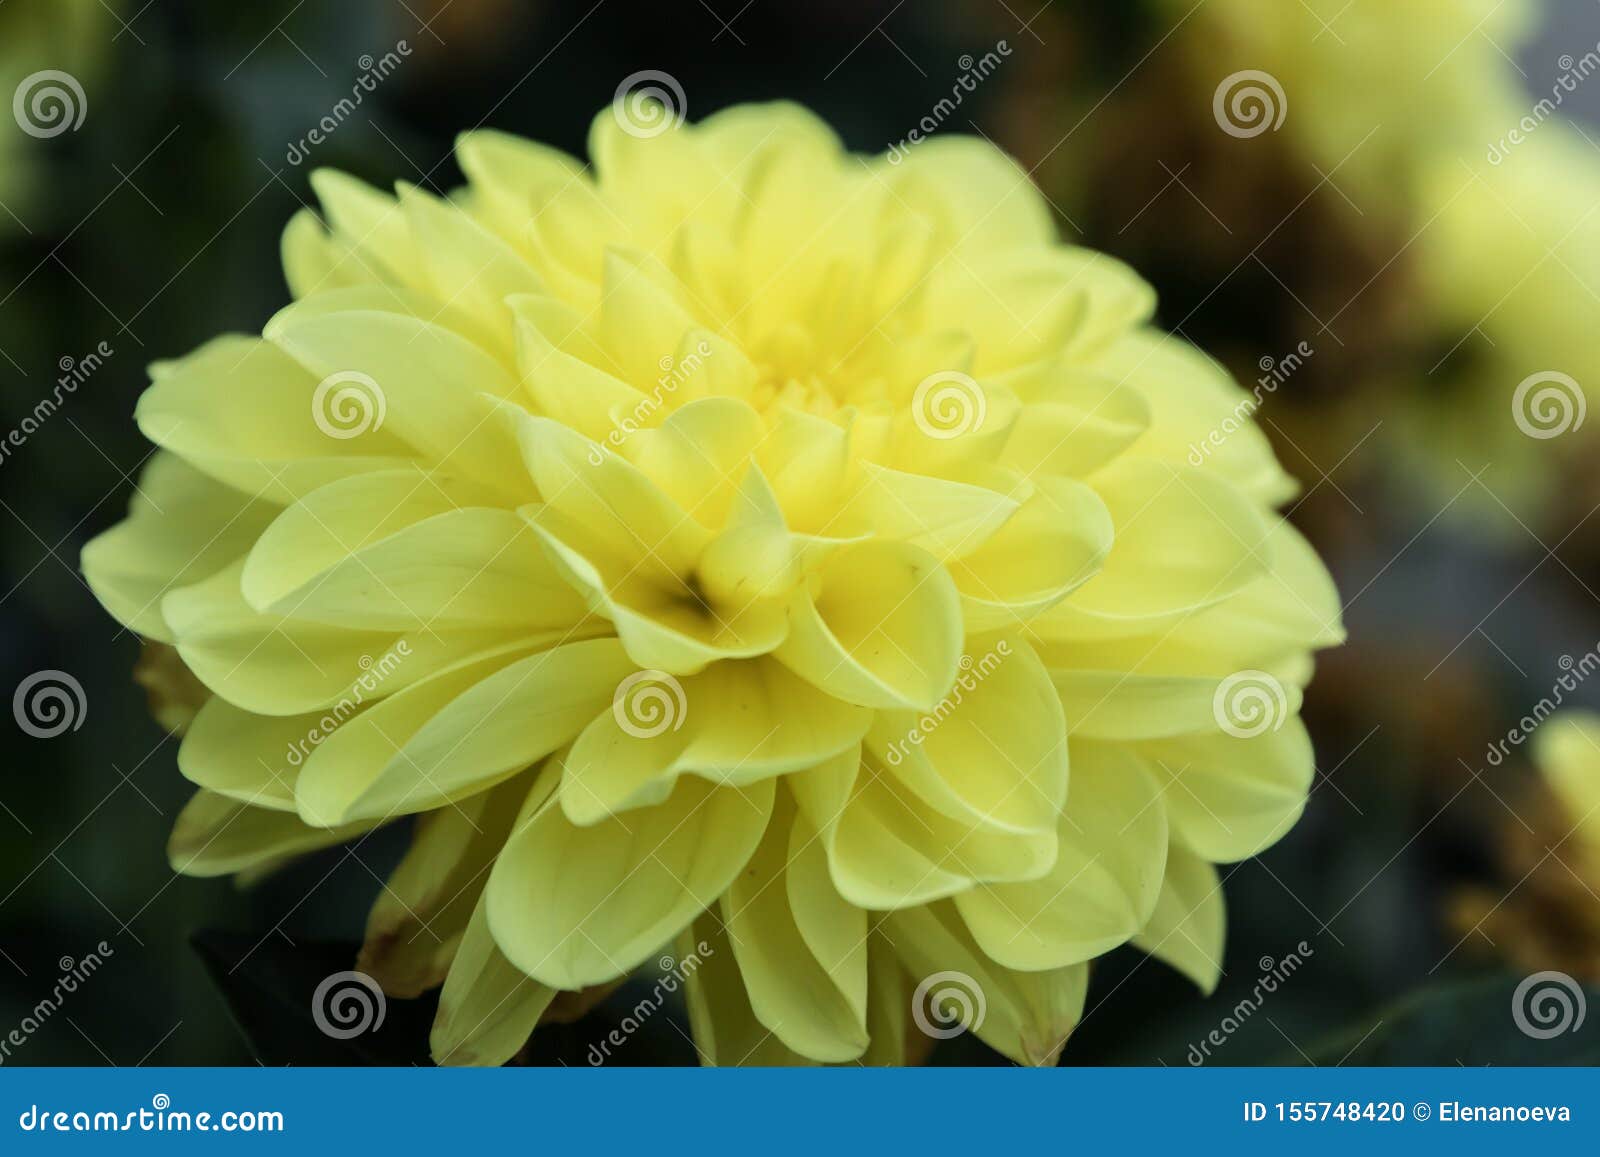 Beautiful Yellow Dahlia Gallery Serenade Flower In Summer Garden Stock